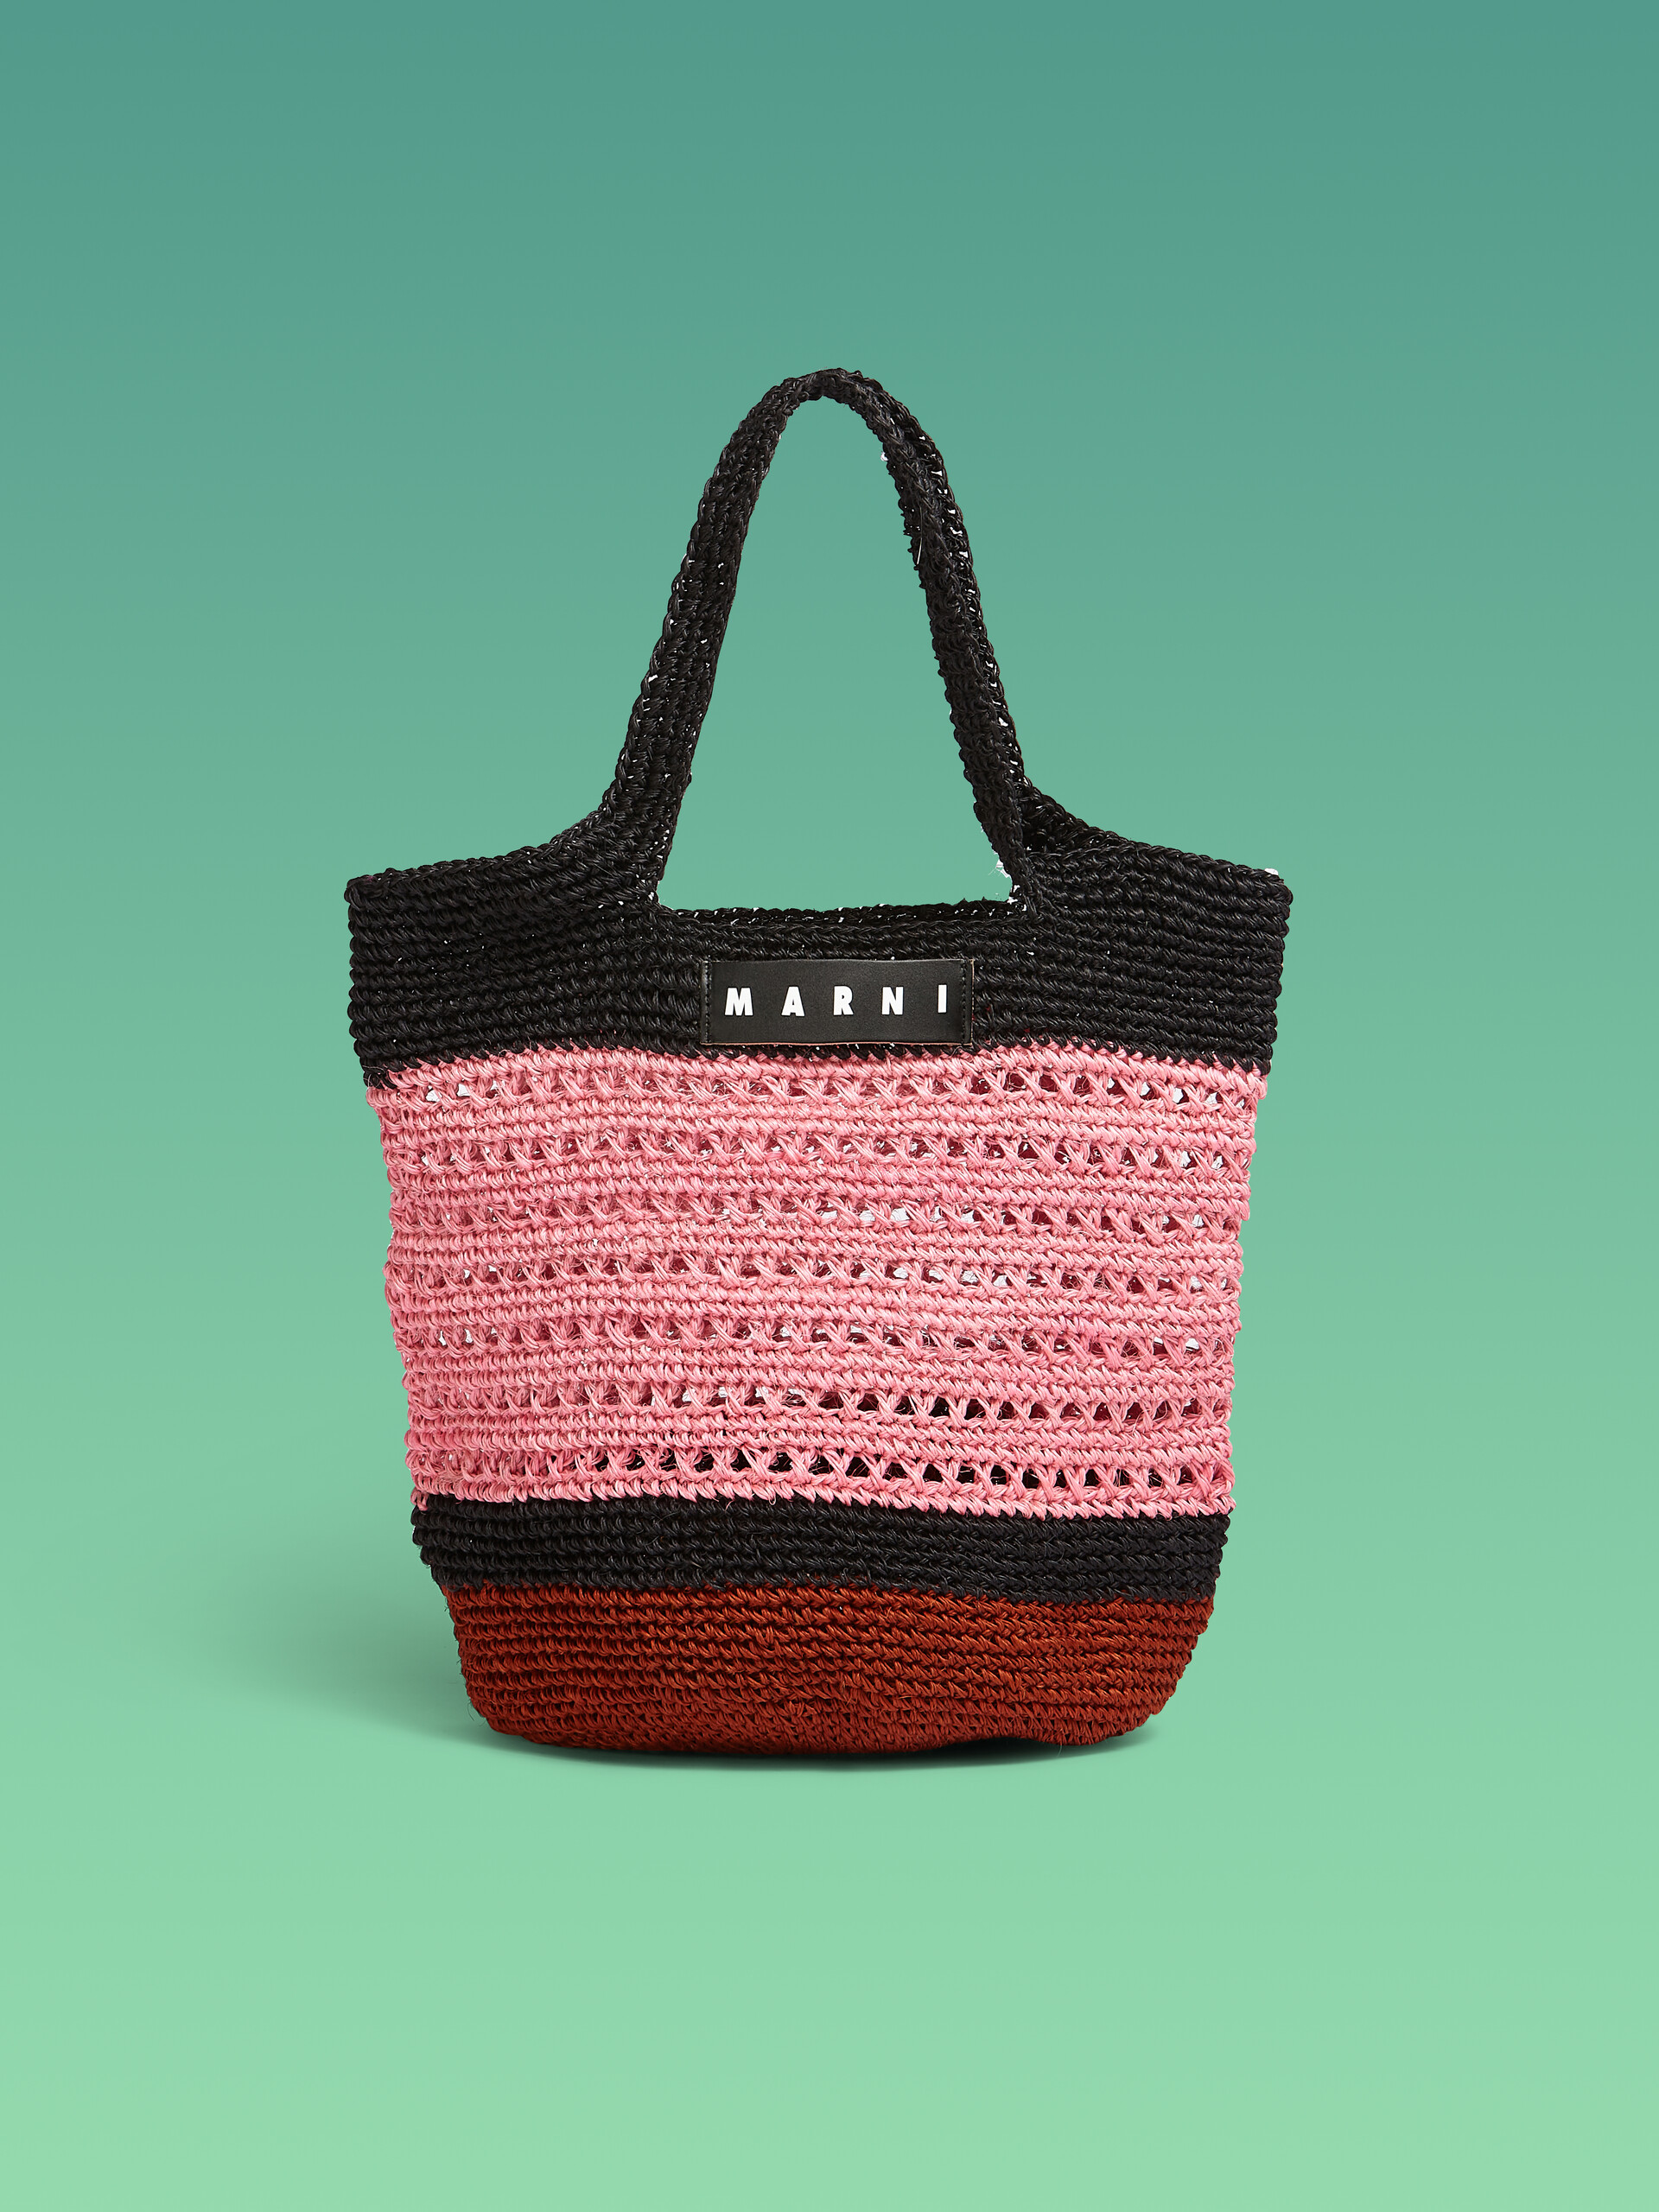 MARNI MARKET DRUM bag in pink and black natural fiber - Shopping Bags - Image 1